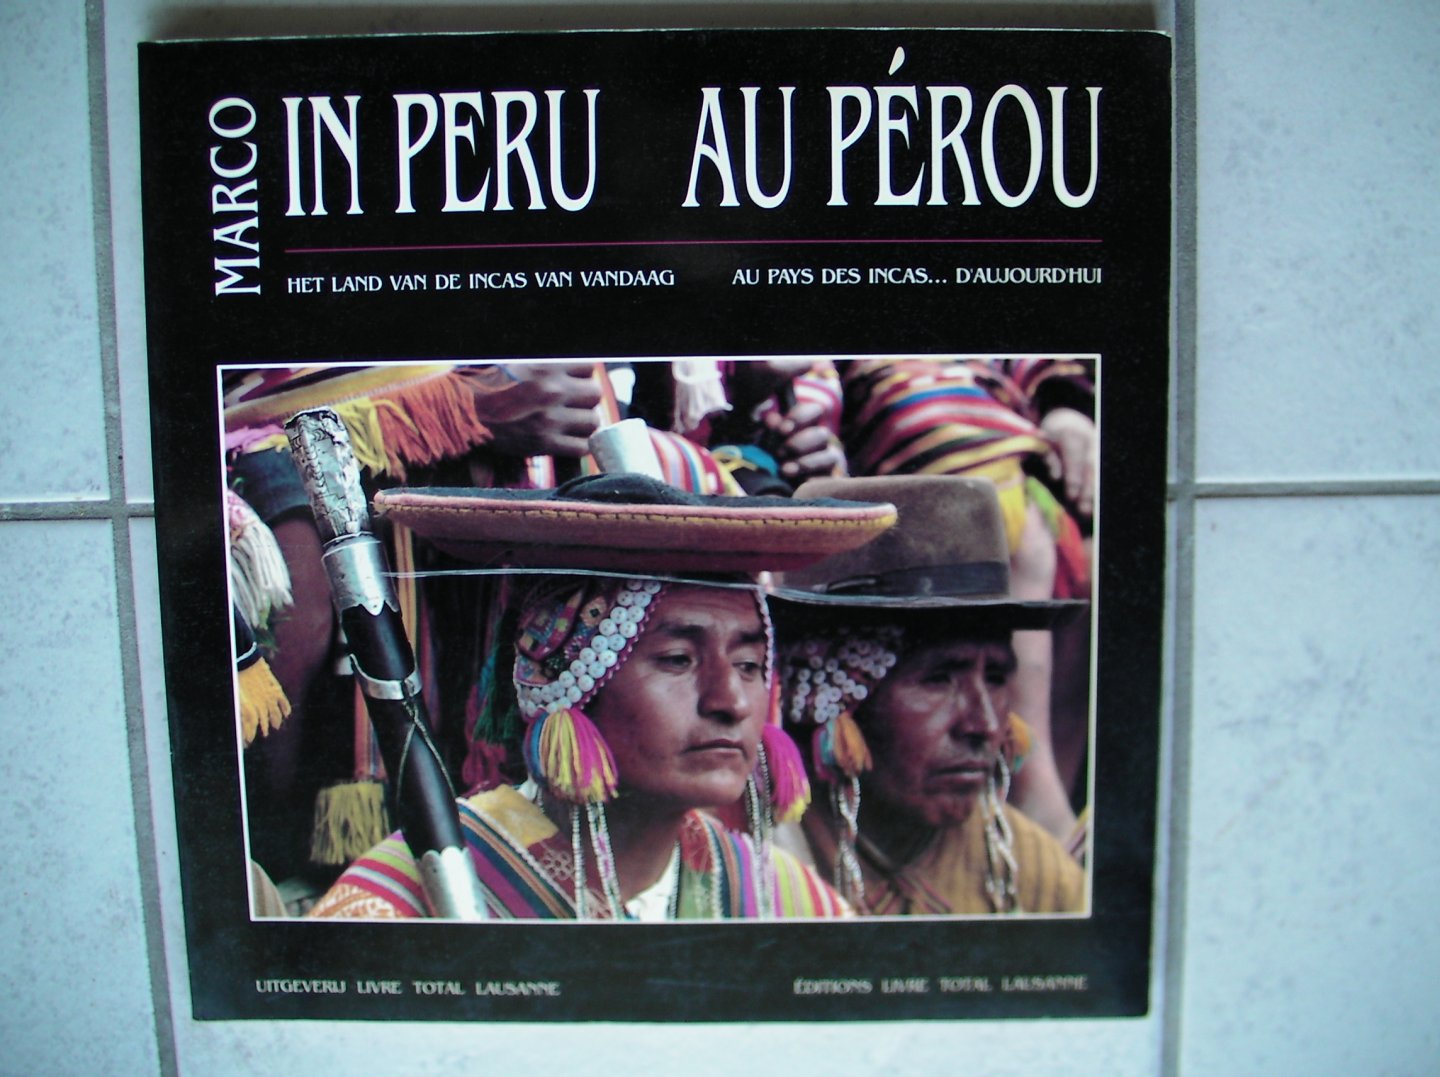 Marco - Marco in Peru / au Peru - het land van de Inca's vandaag/au pays des Incas d"aujourd'hui,